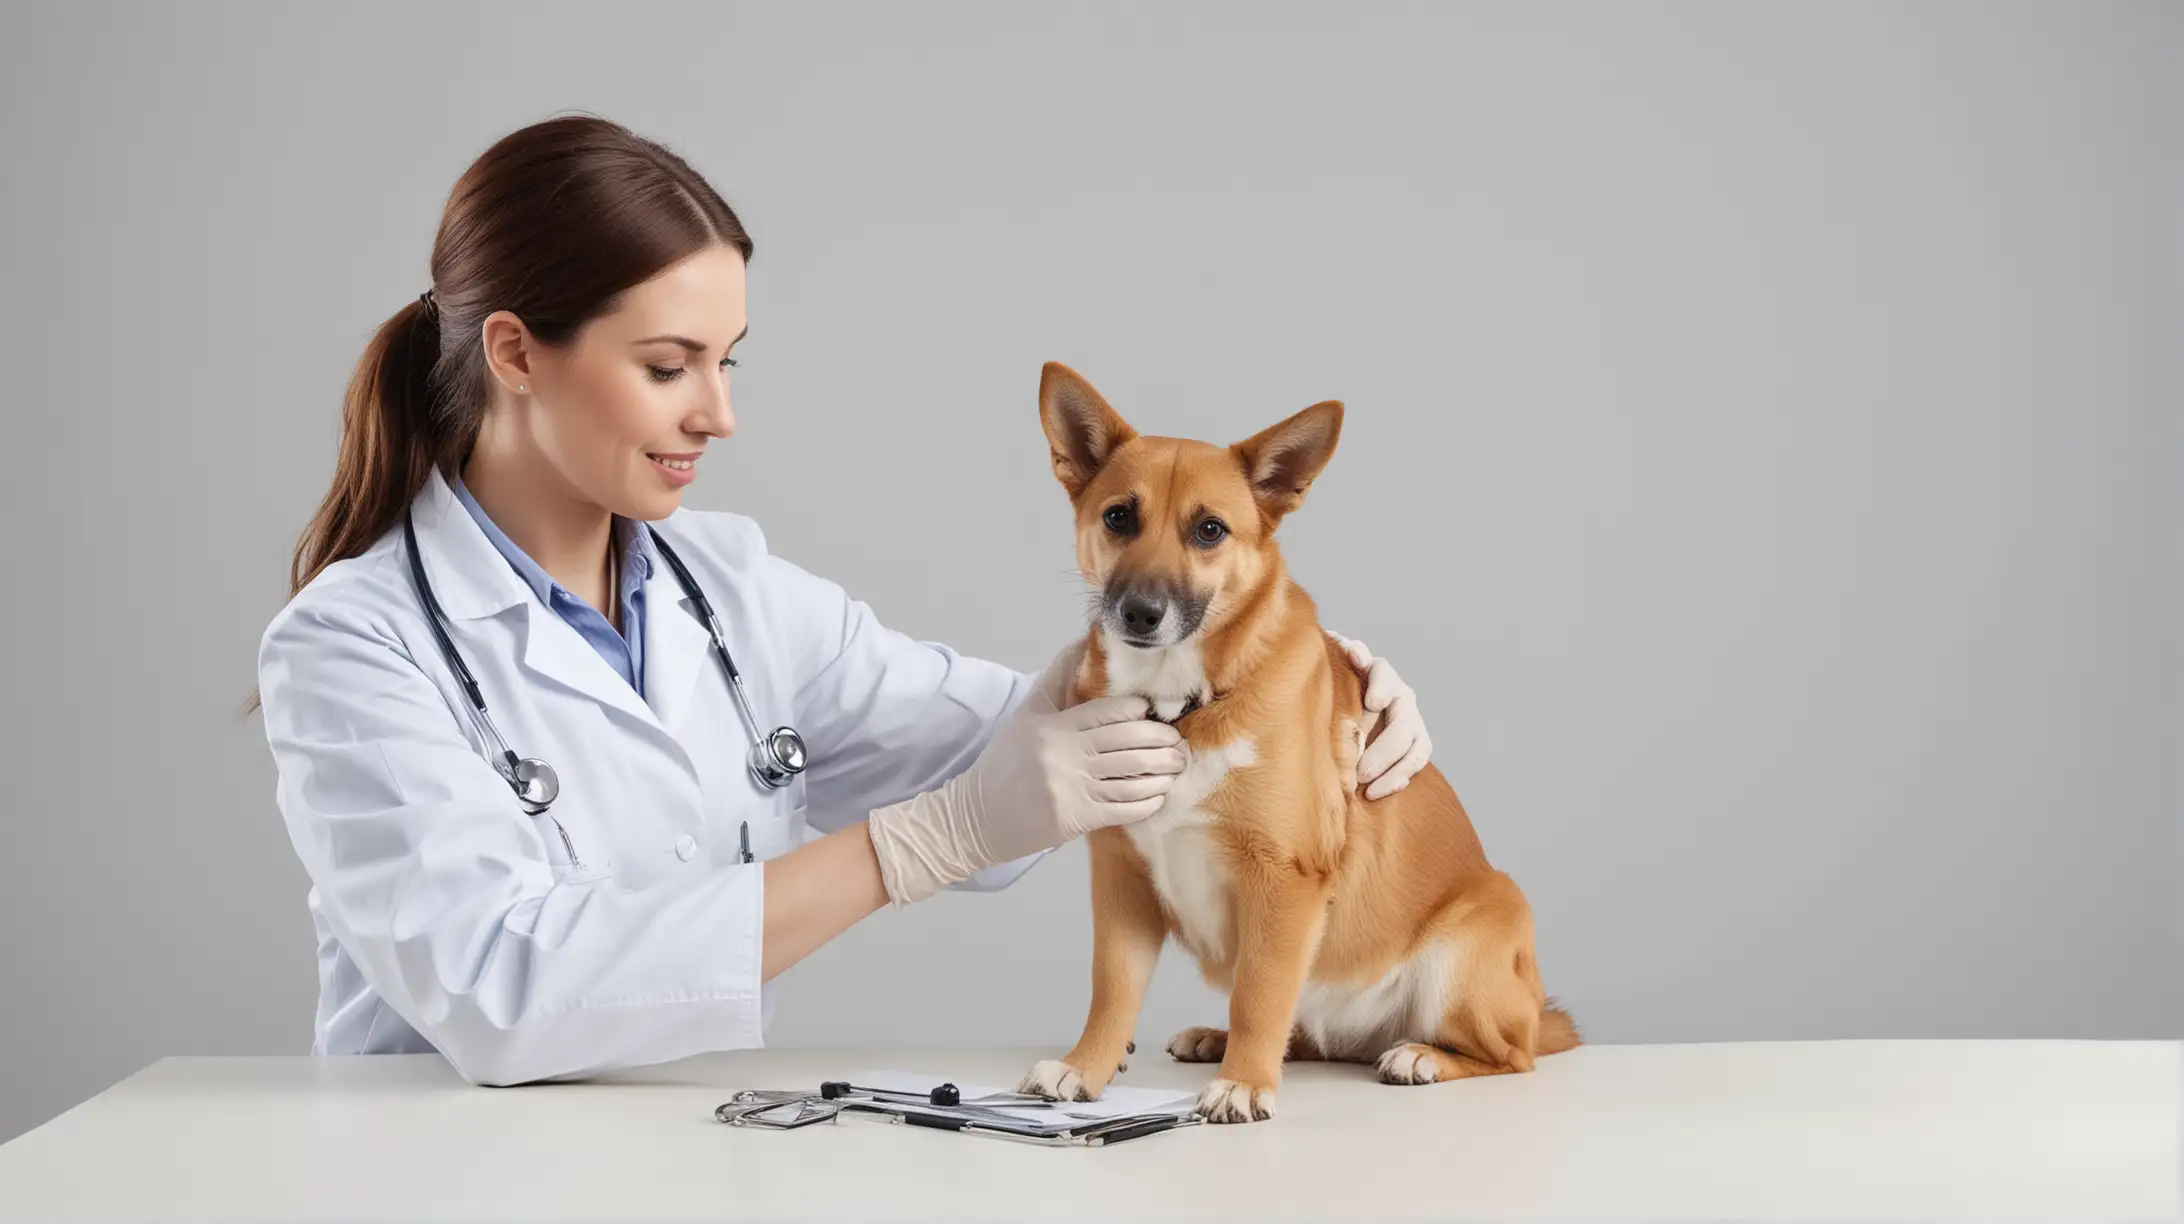 Veterinarian Examining Pet in a Professional Veterinary Clinic Setting